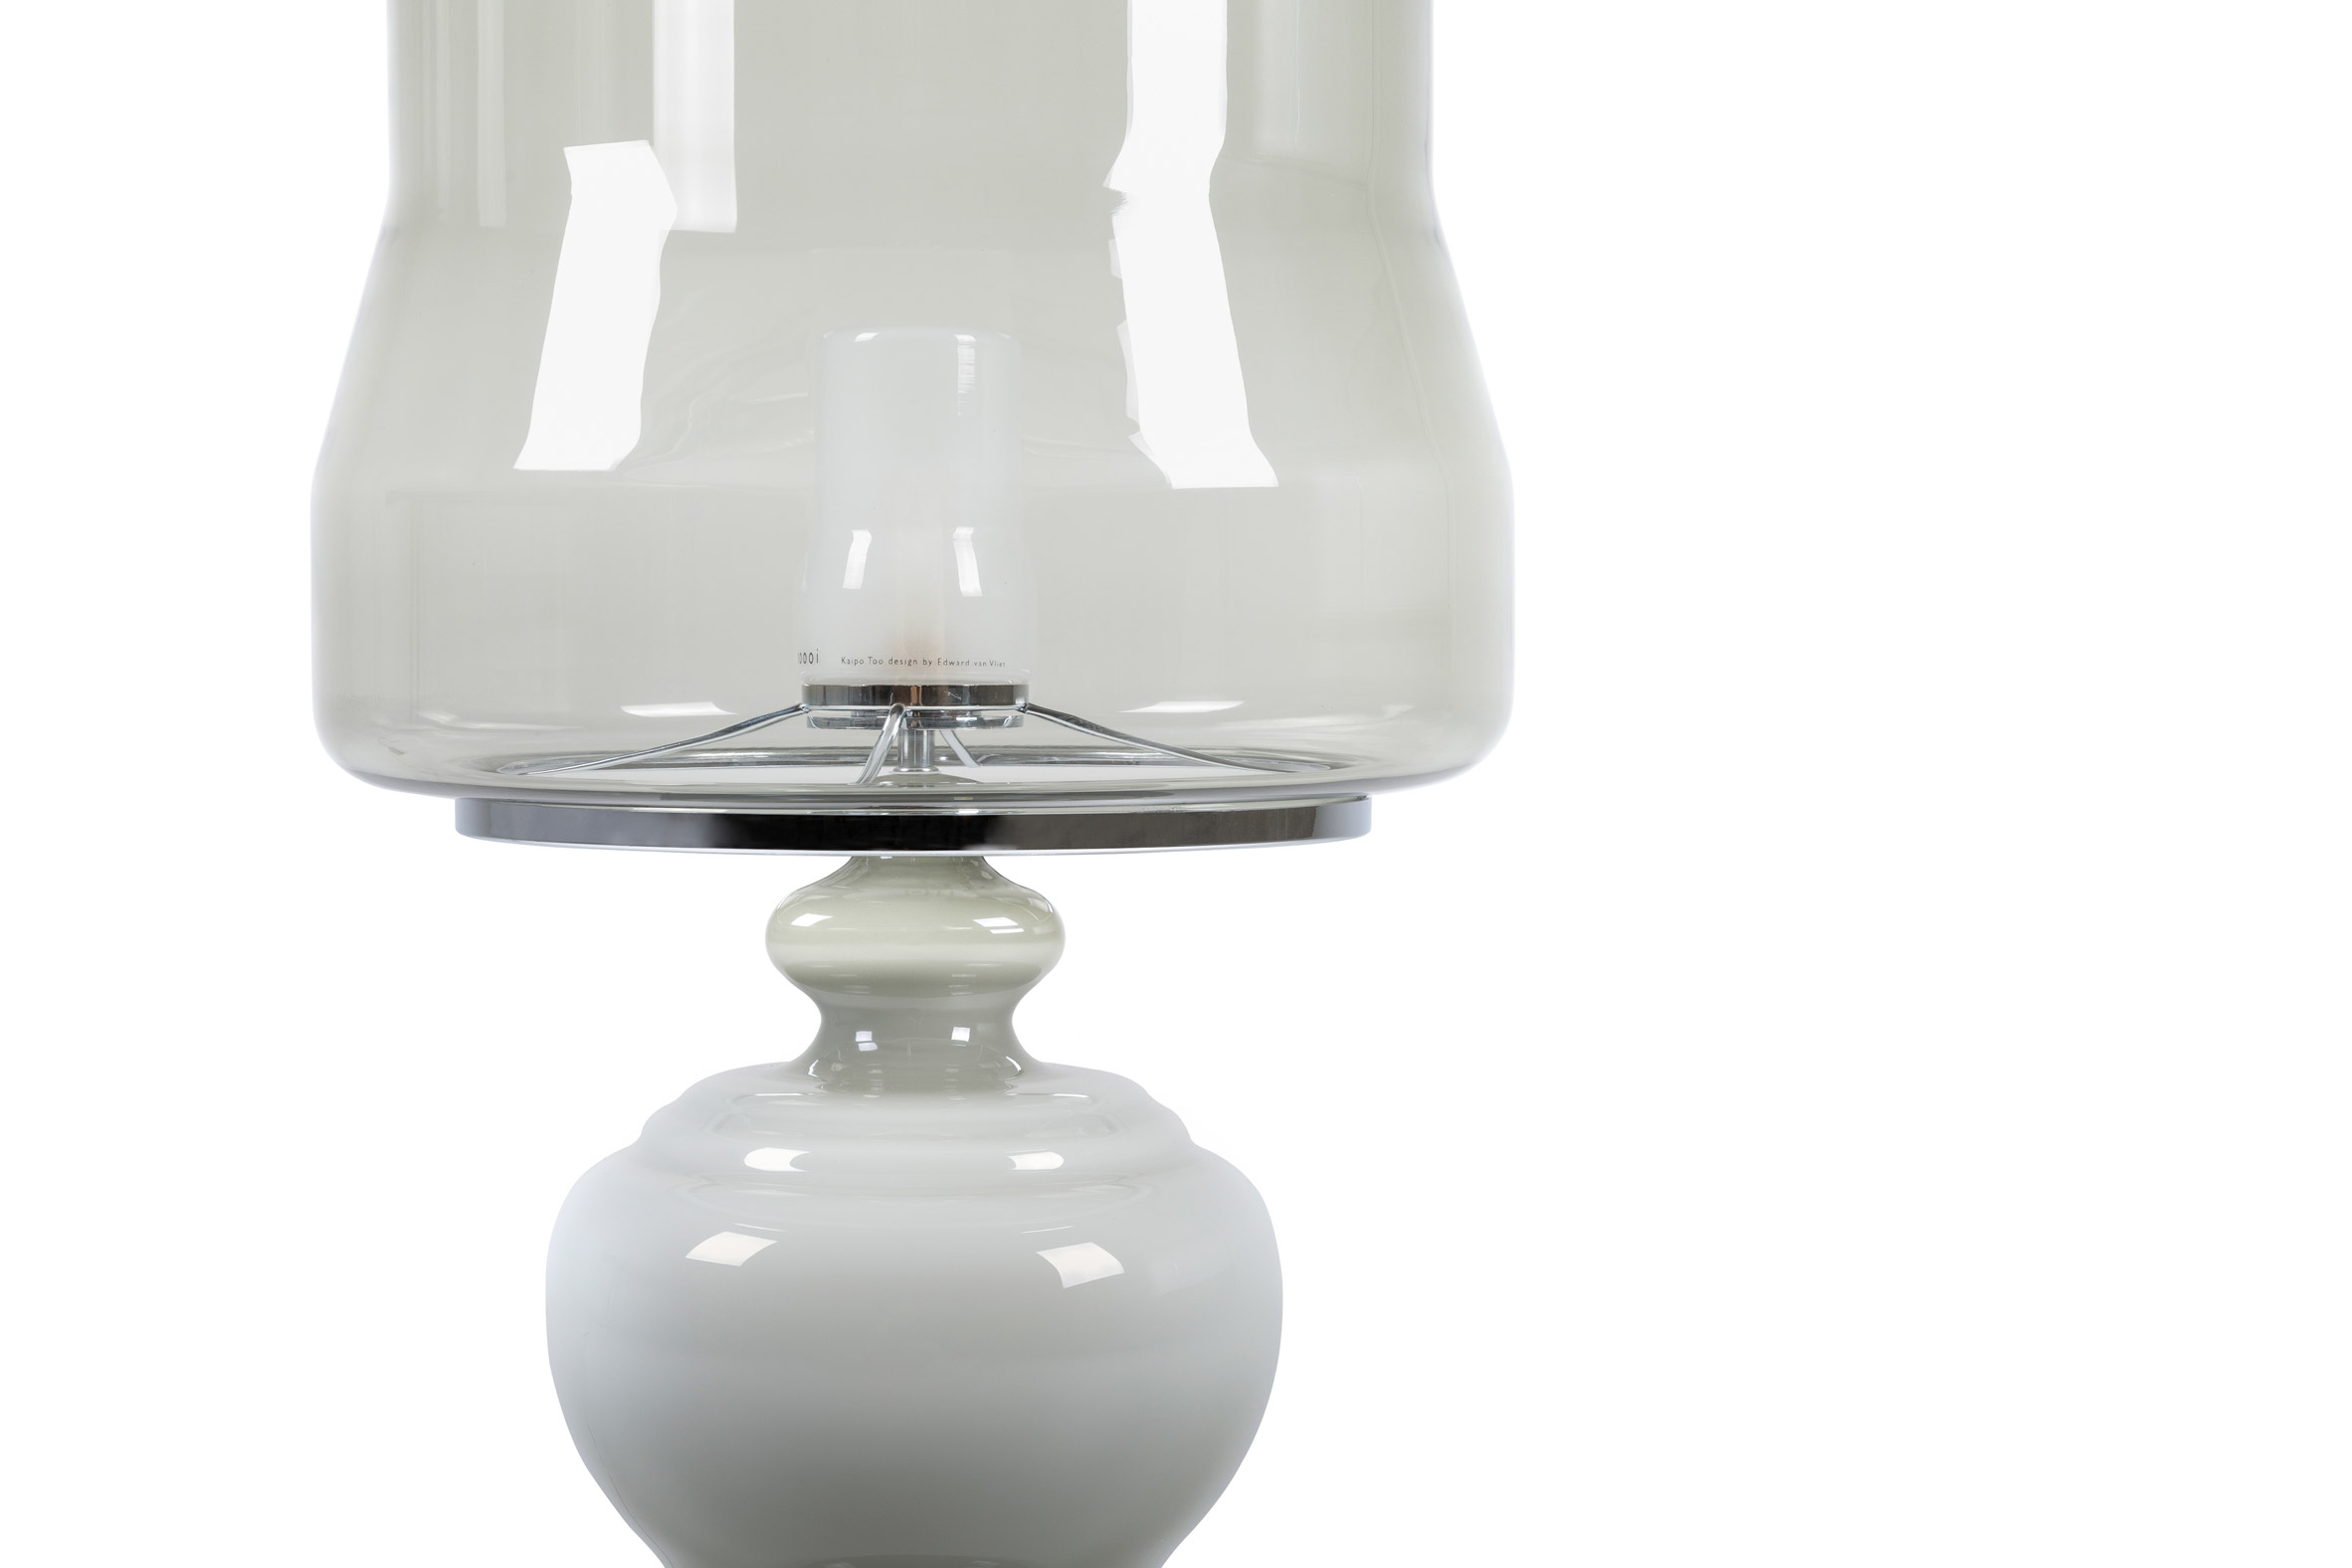 Dutch designer Edward Van Vliet designed the Kaipo Too table lamp for Moooi